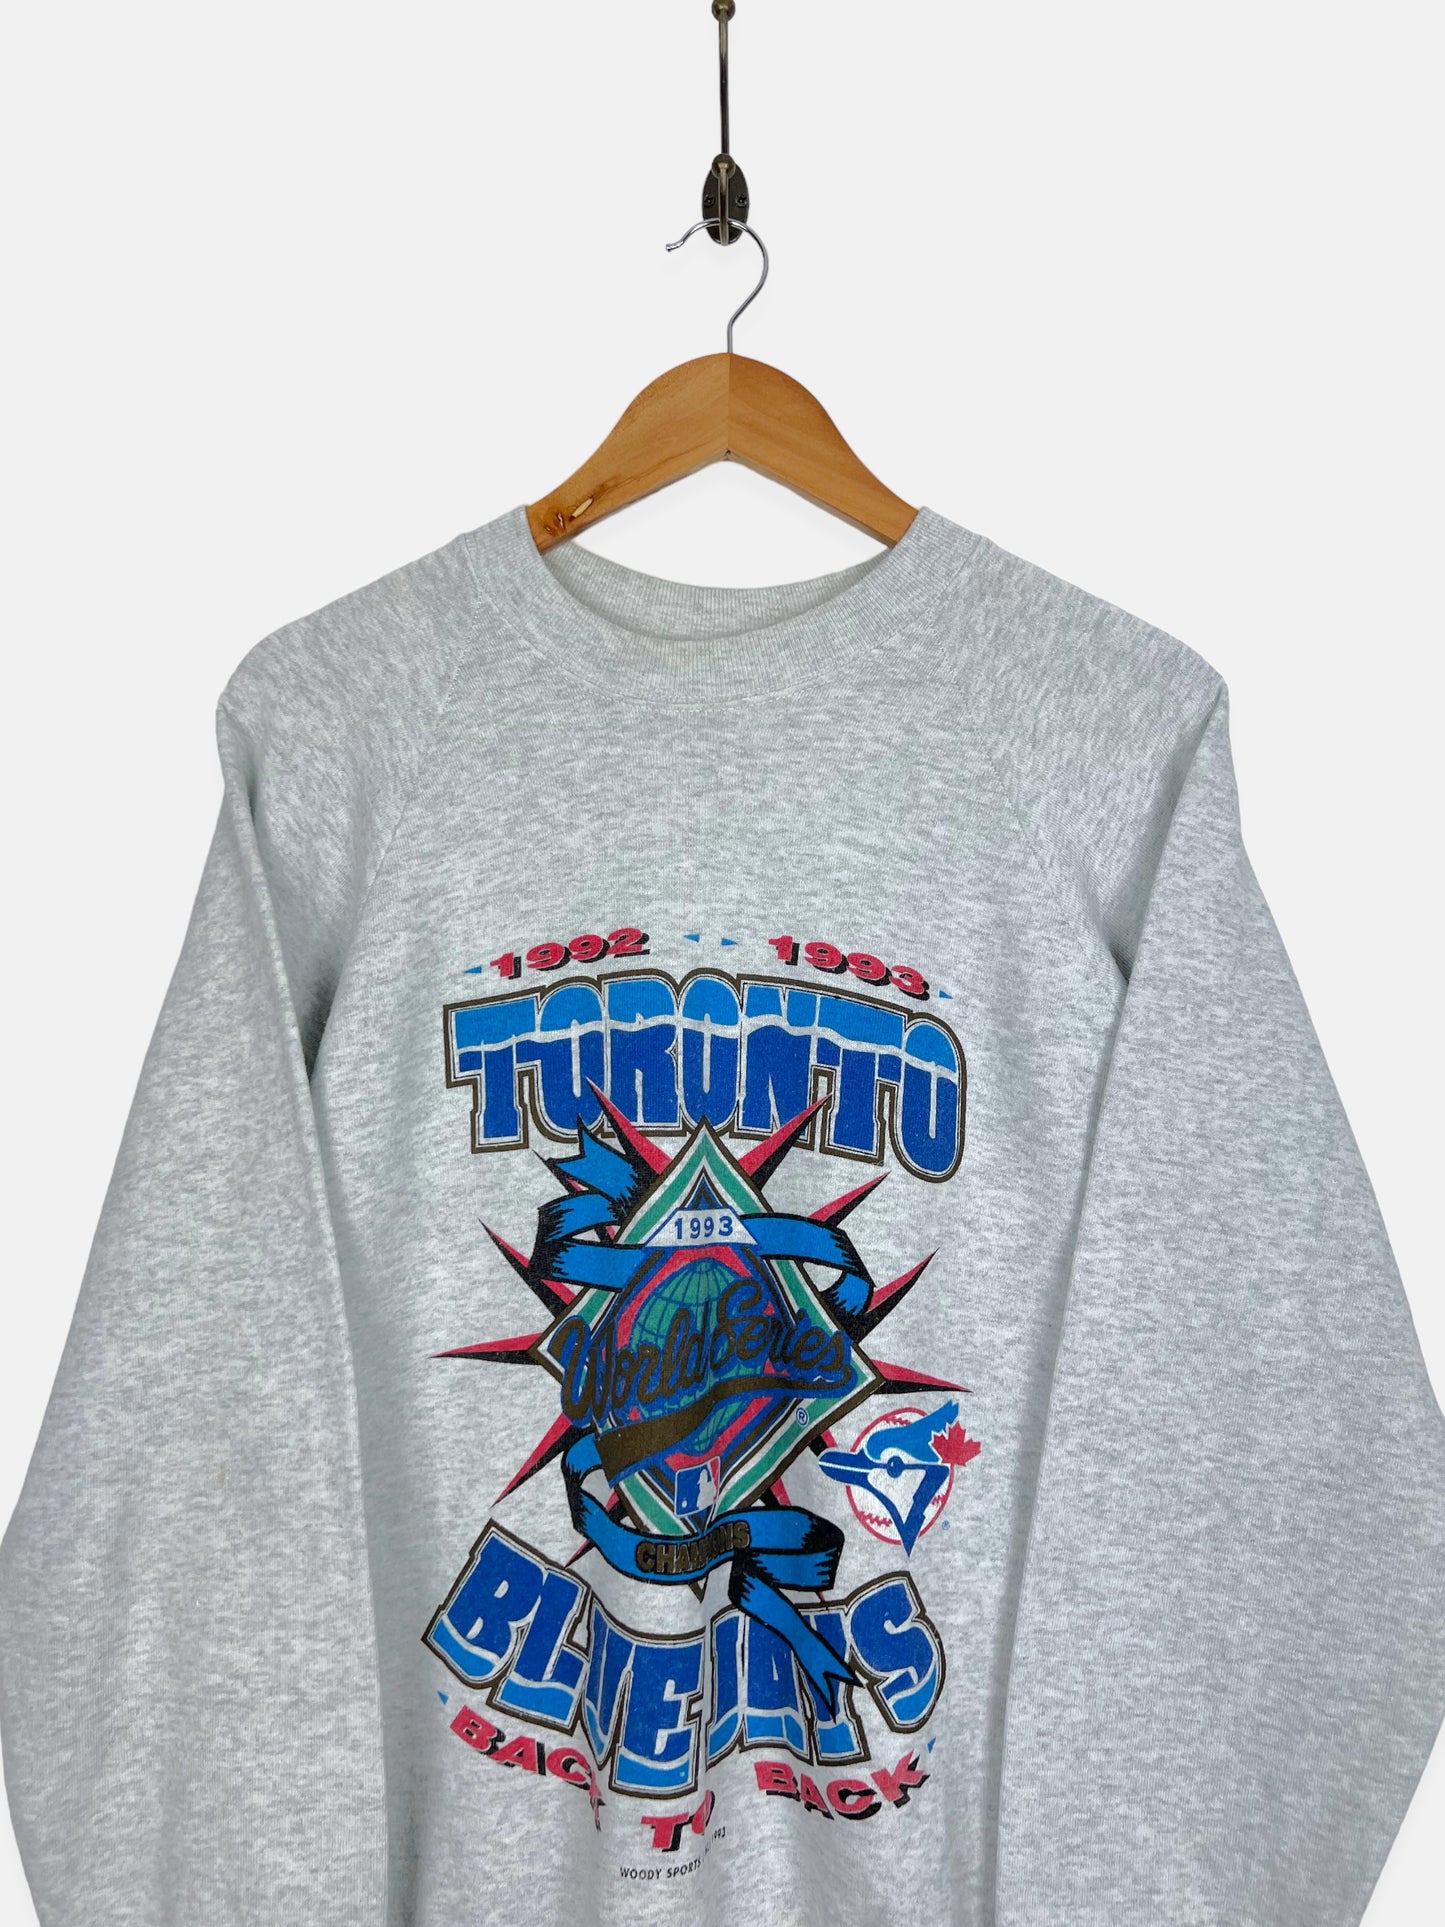 1993 Toronto Blue Jays MLB Canada Made Vintage Sweatshirt Size 10-12